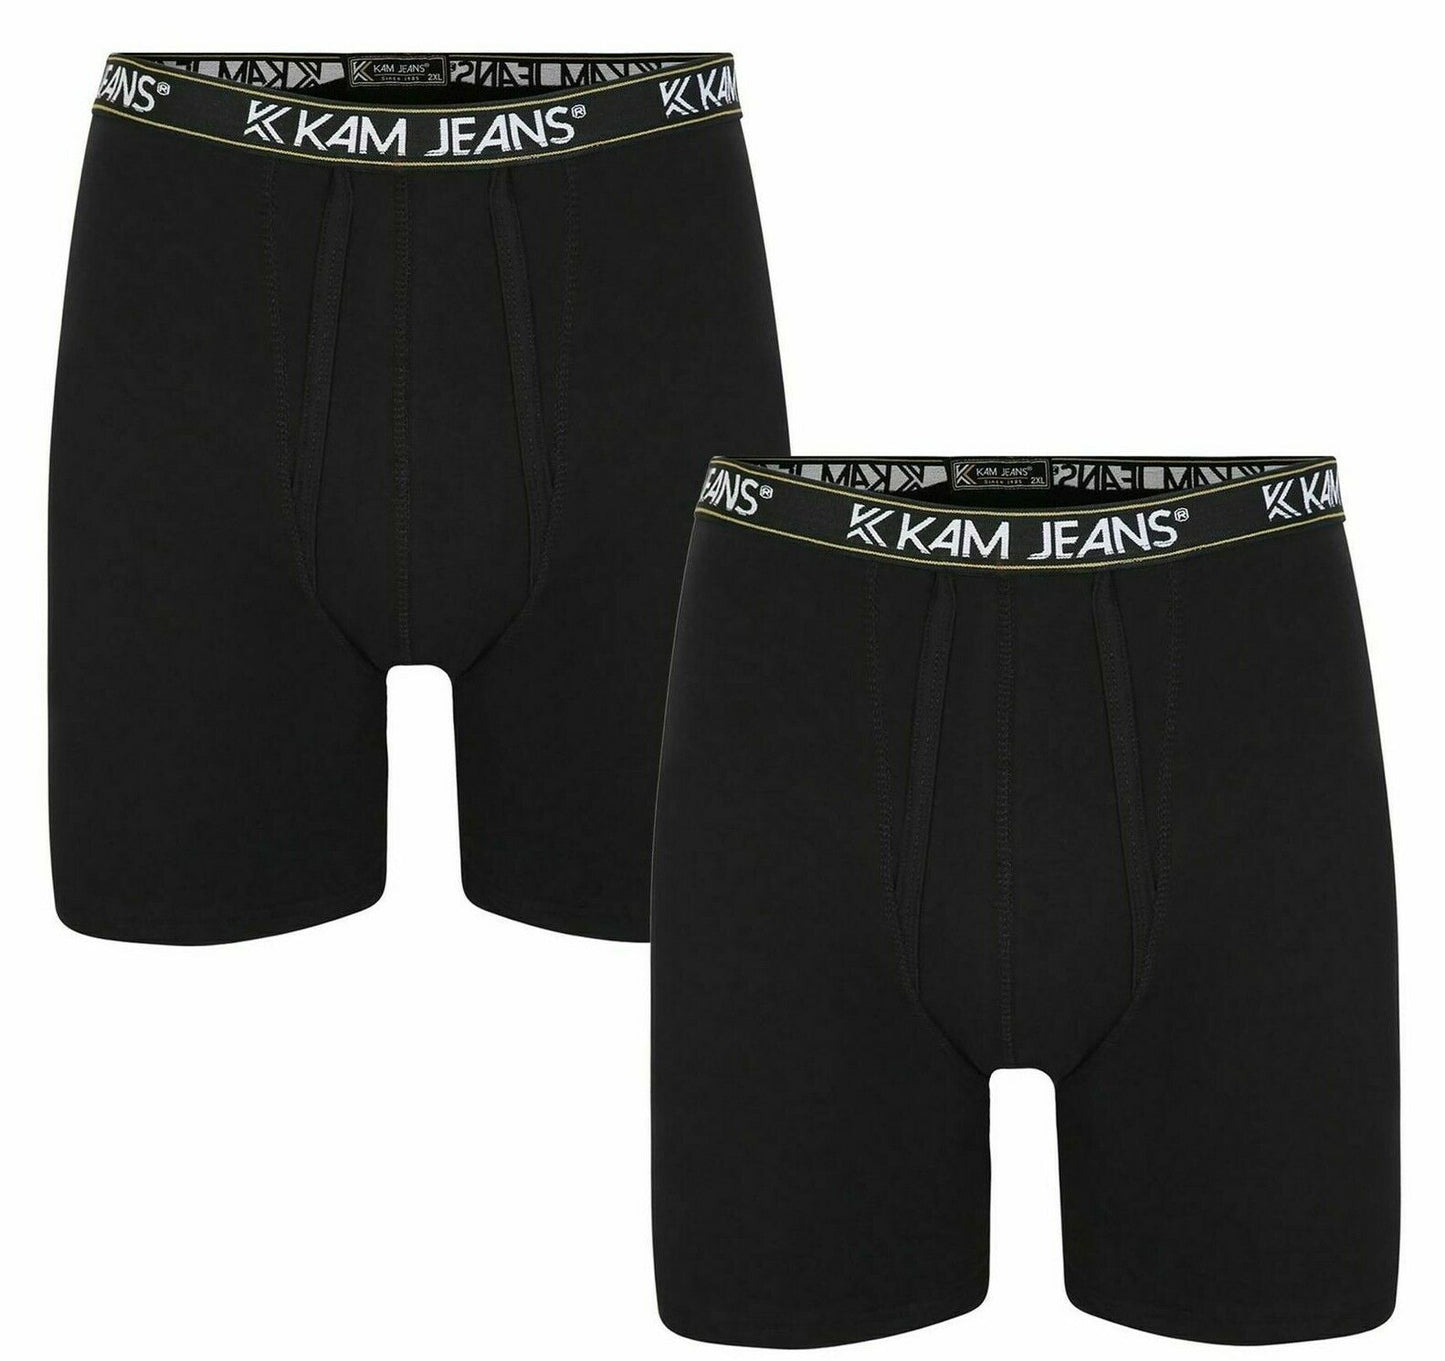 Mens King Size 2 3 Pack Underwear Big Boxer Shorts Kam Cotton Classic 2XL-8XL